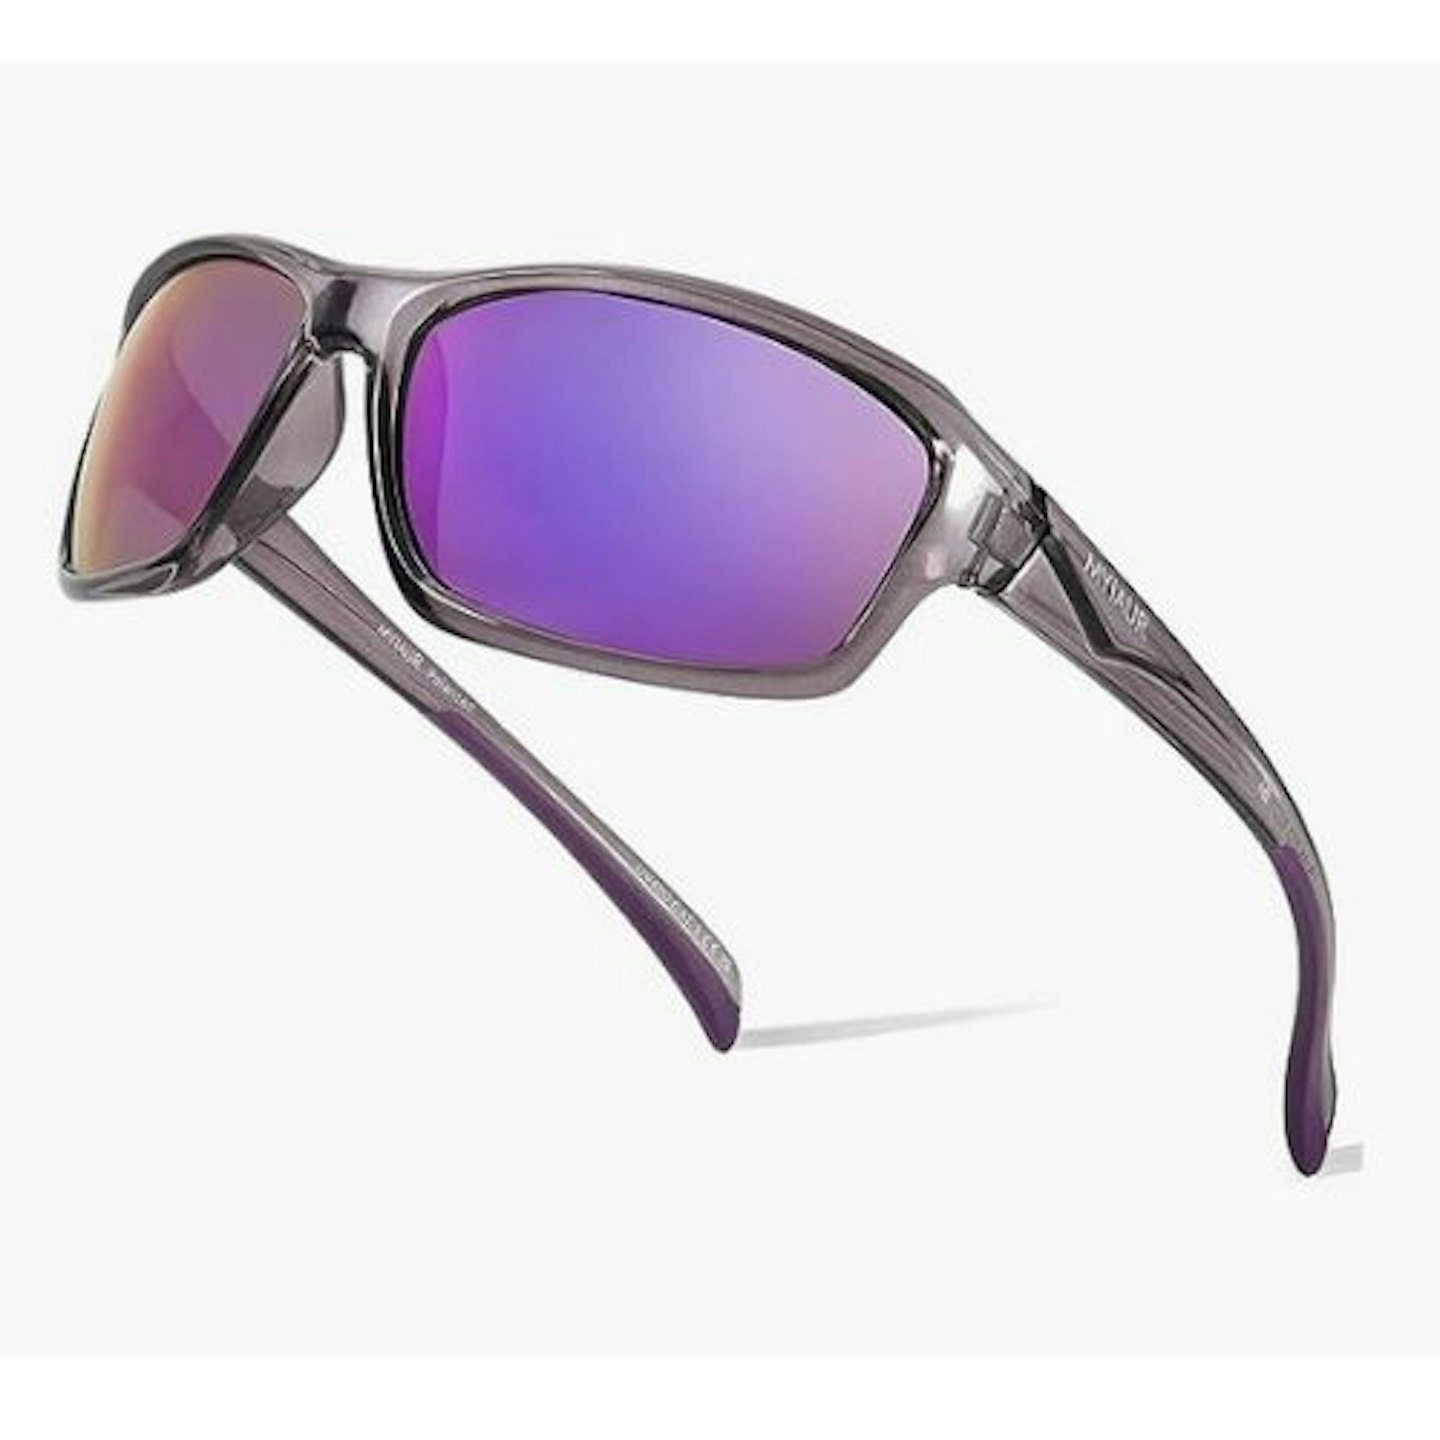 Myiaur Polarized Sports Sunglasses